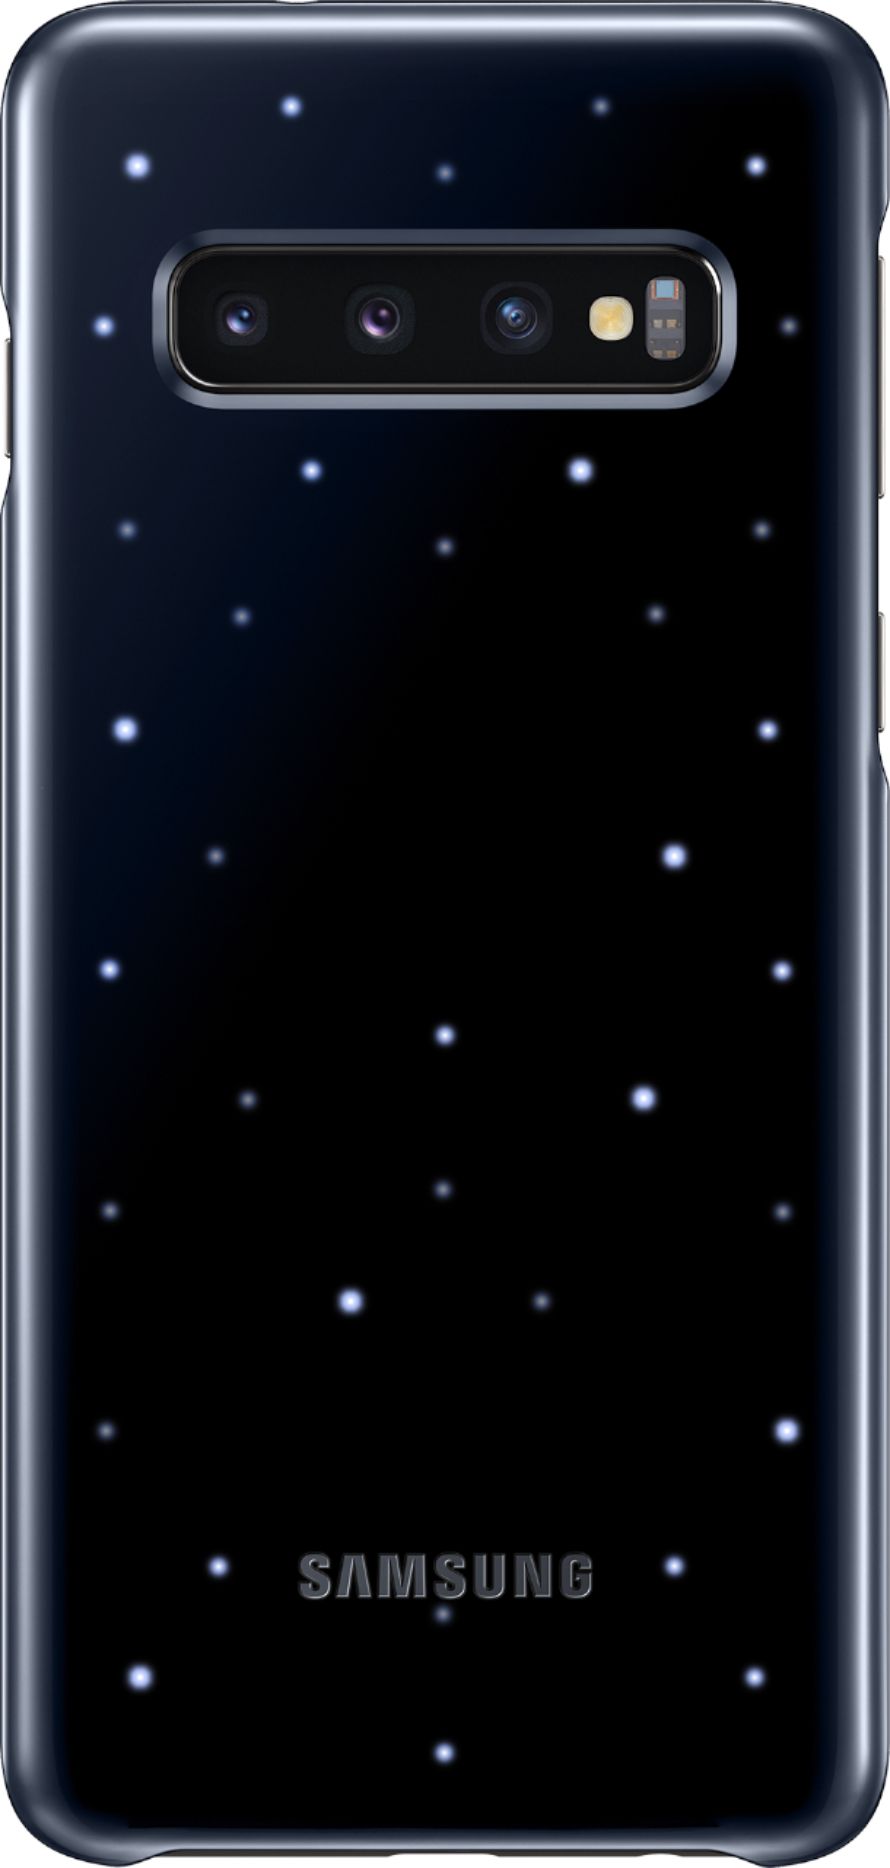 Afslut gen Awaken LED Back Cover Case for Samsung Galaxy S10 Black EF-KG973CBEGUS - Best Buy